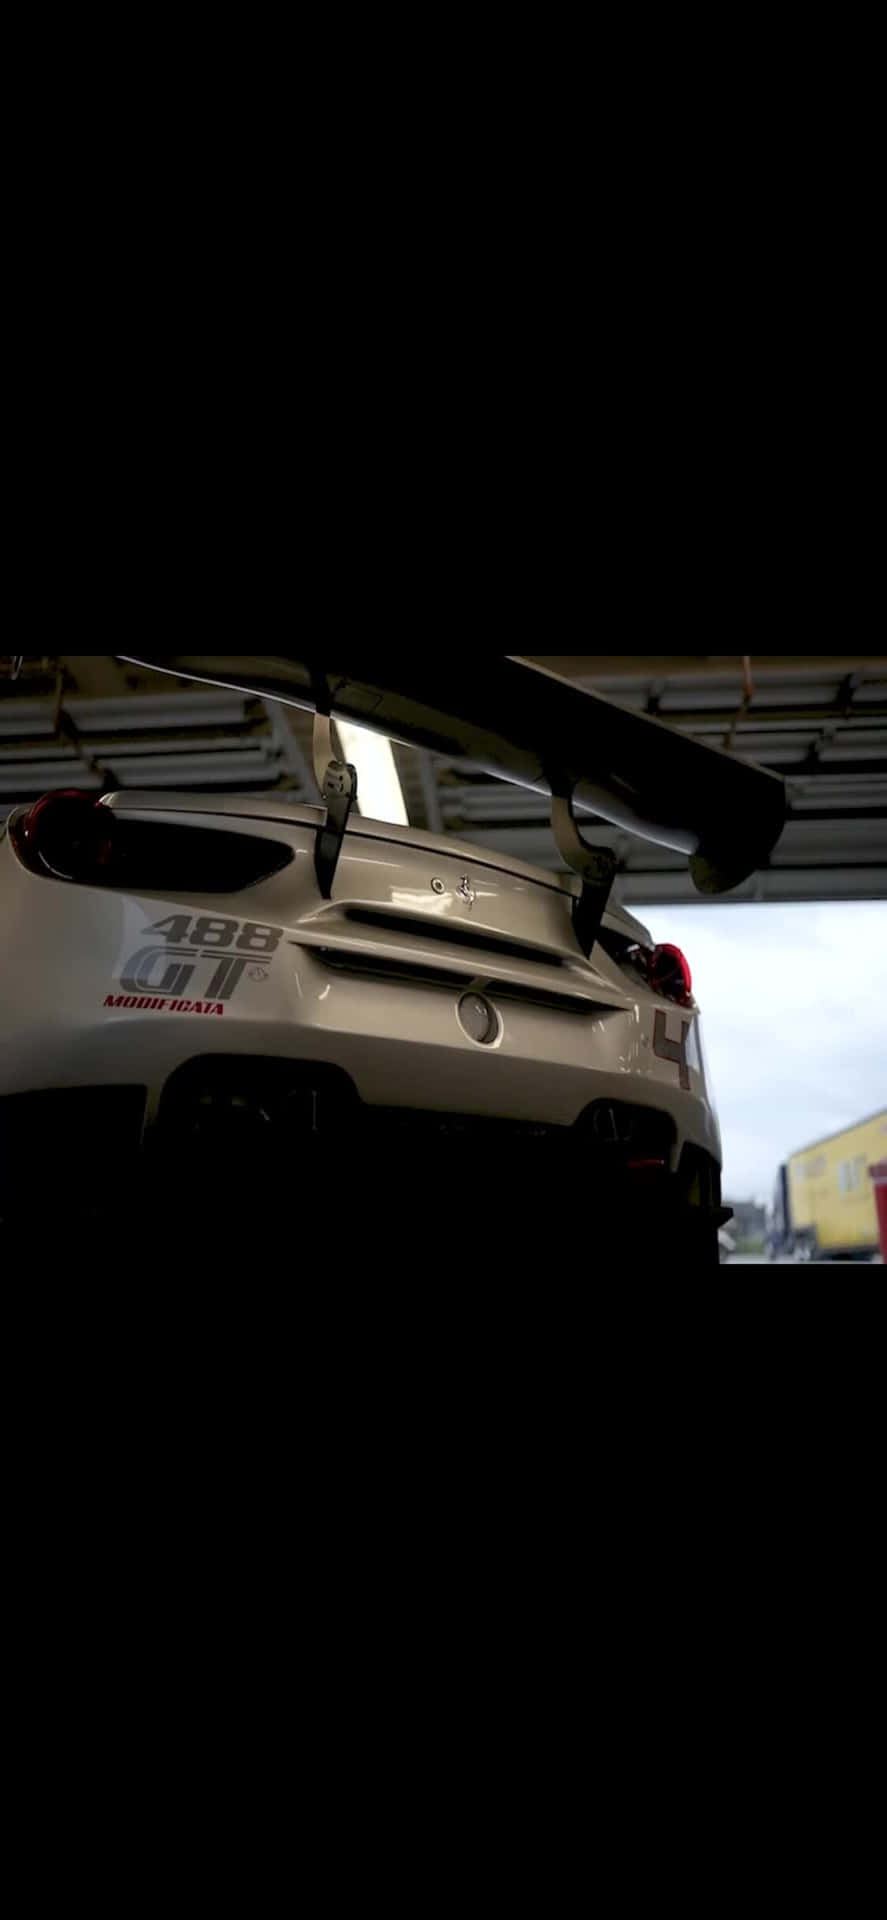 Sfondohonda Nsx Per Iphone X Forza Motorsport 7